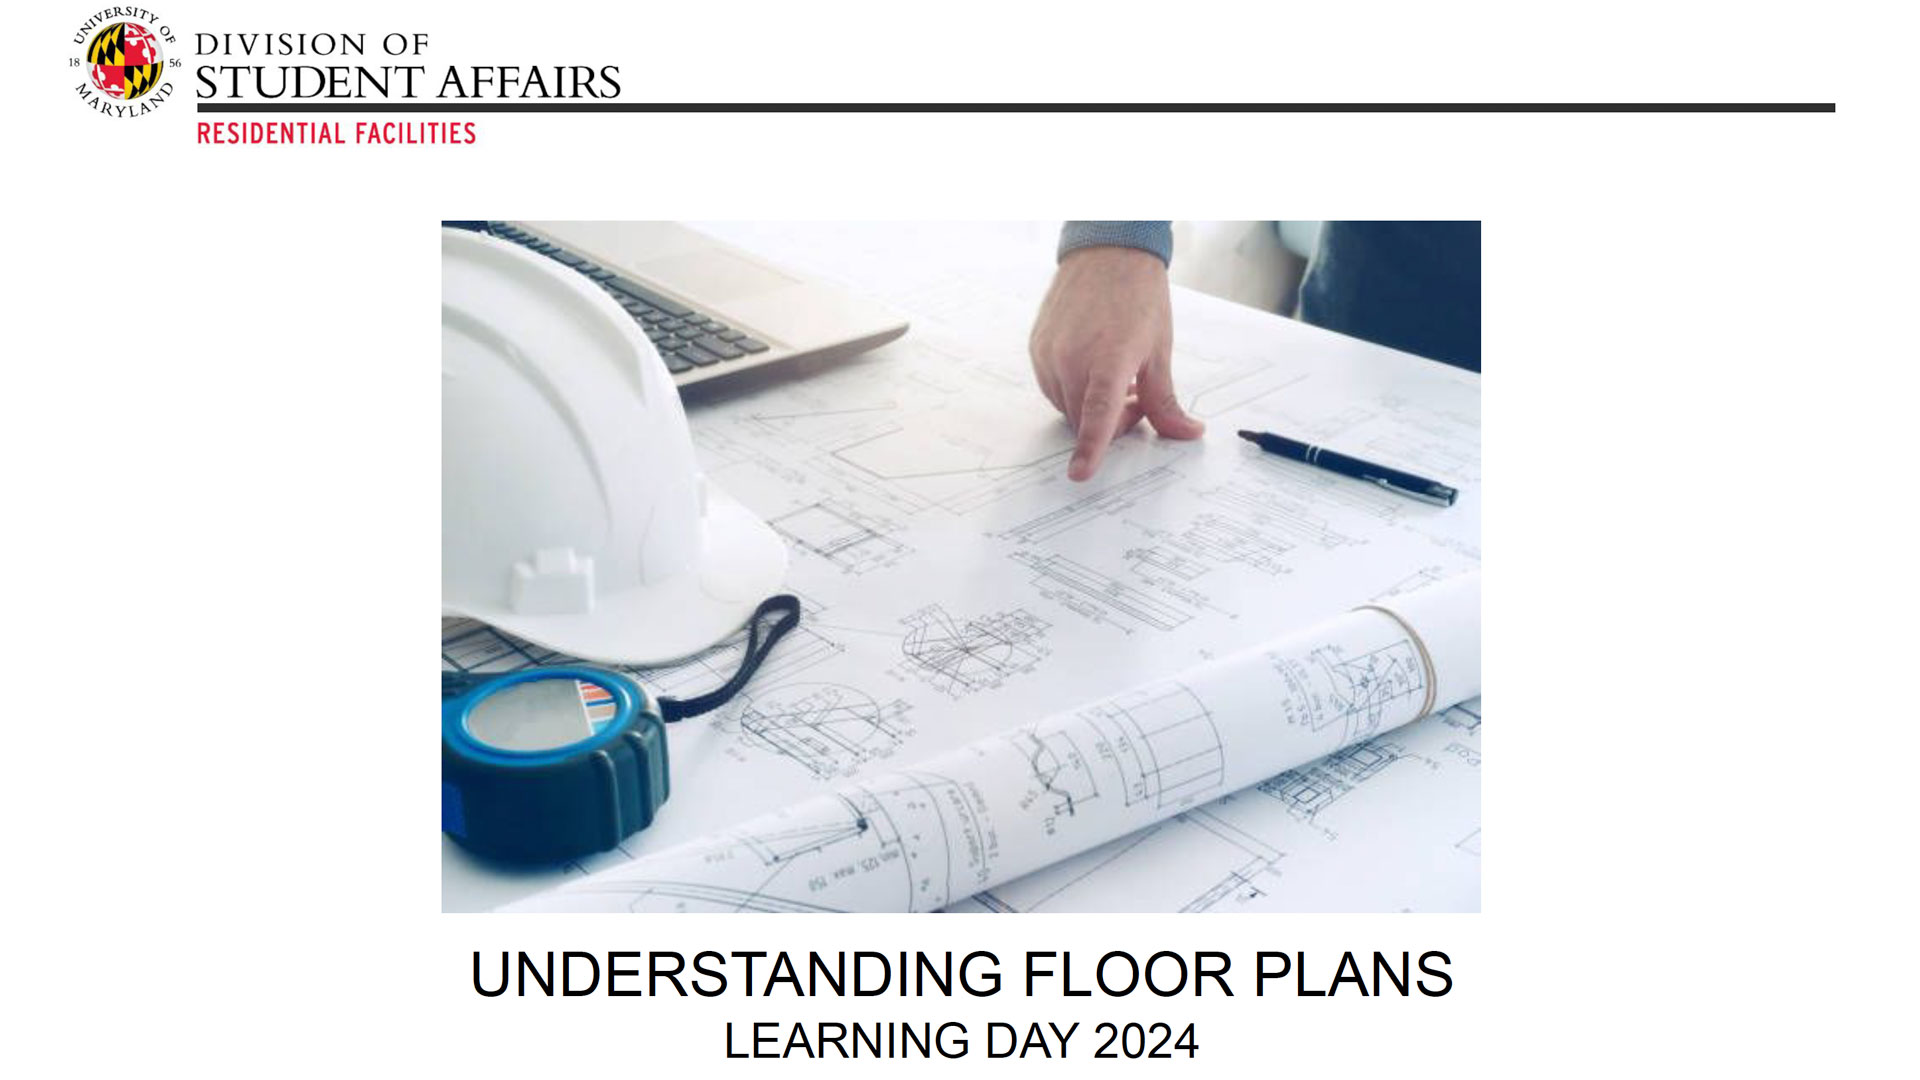 Understanding Floor Plans presentation slide deck cover